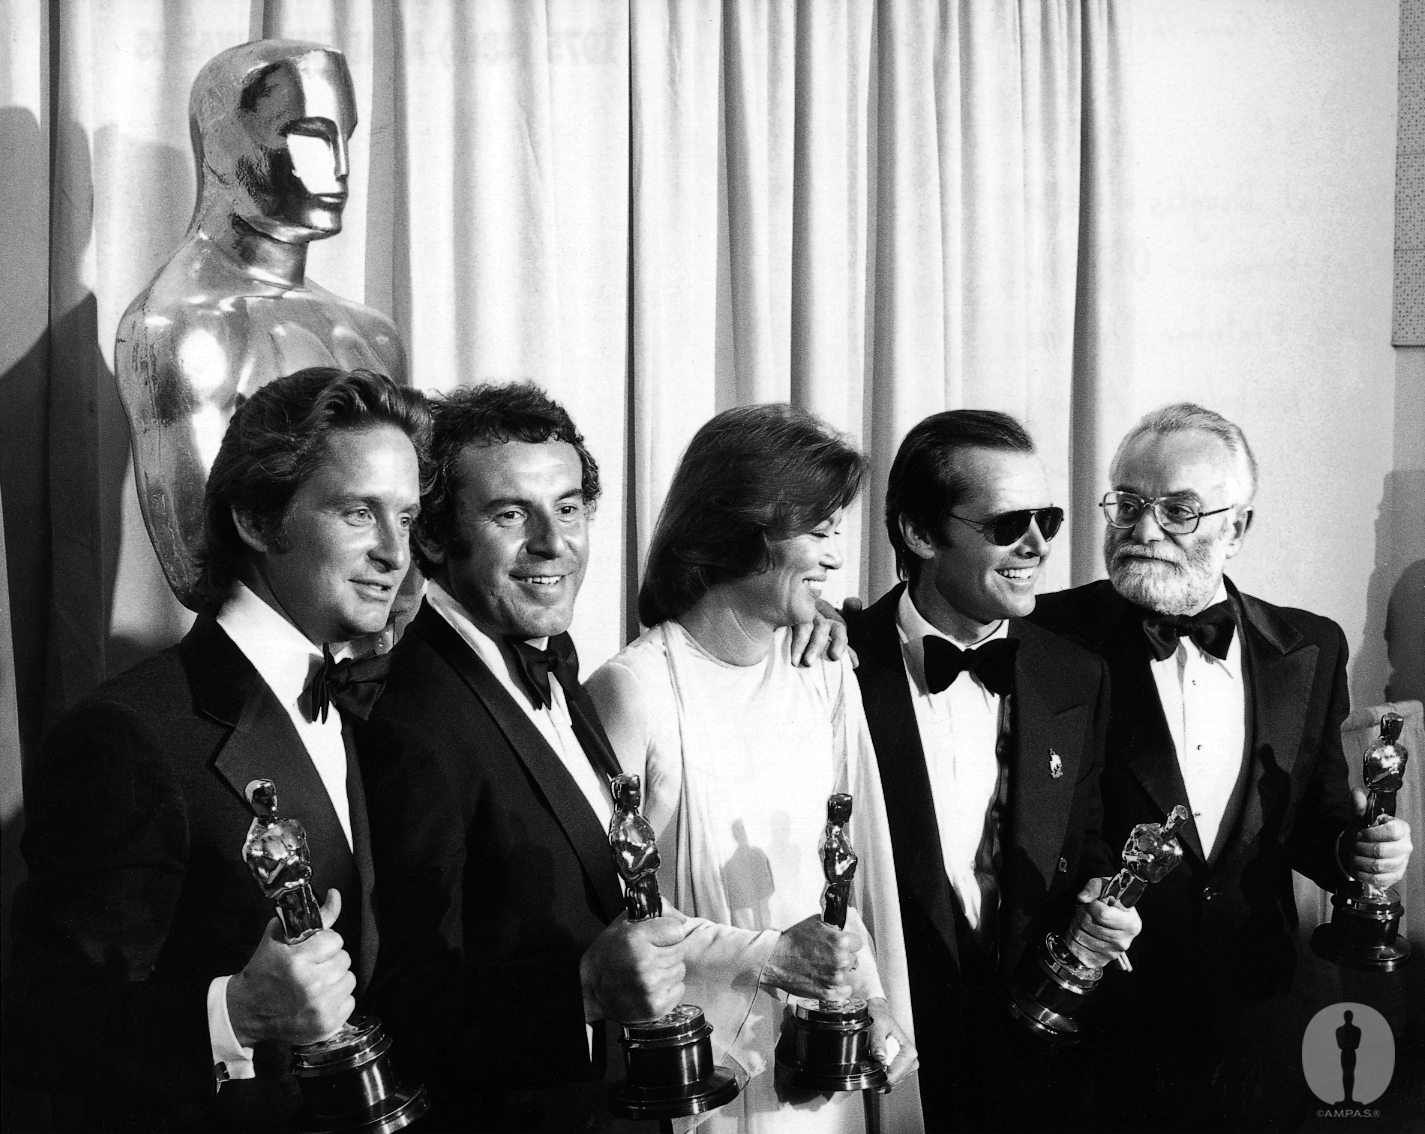 Best Picture winners Michael Douglas and Saul Zaentz flank Best Director Milos Foreman, Best Actress Louise Fletcher and Best Actor Jack Nicholson (